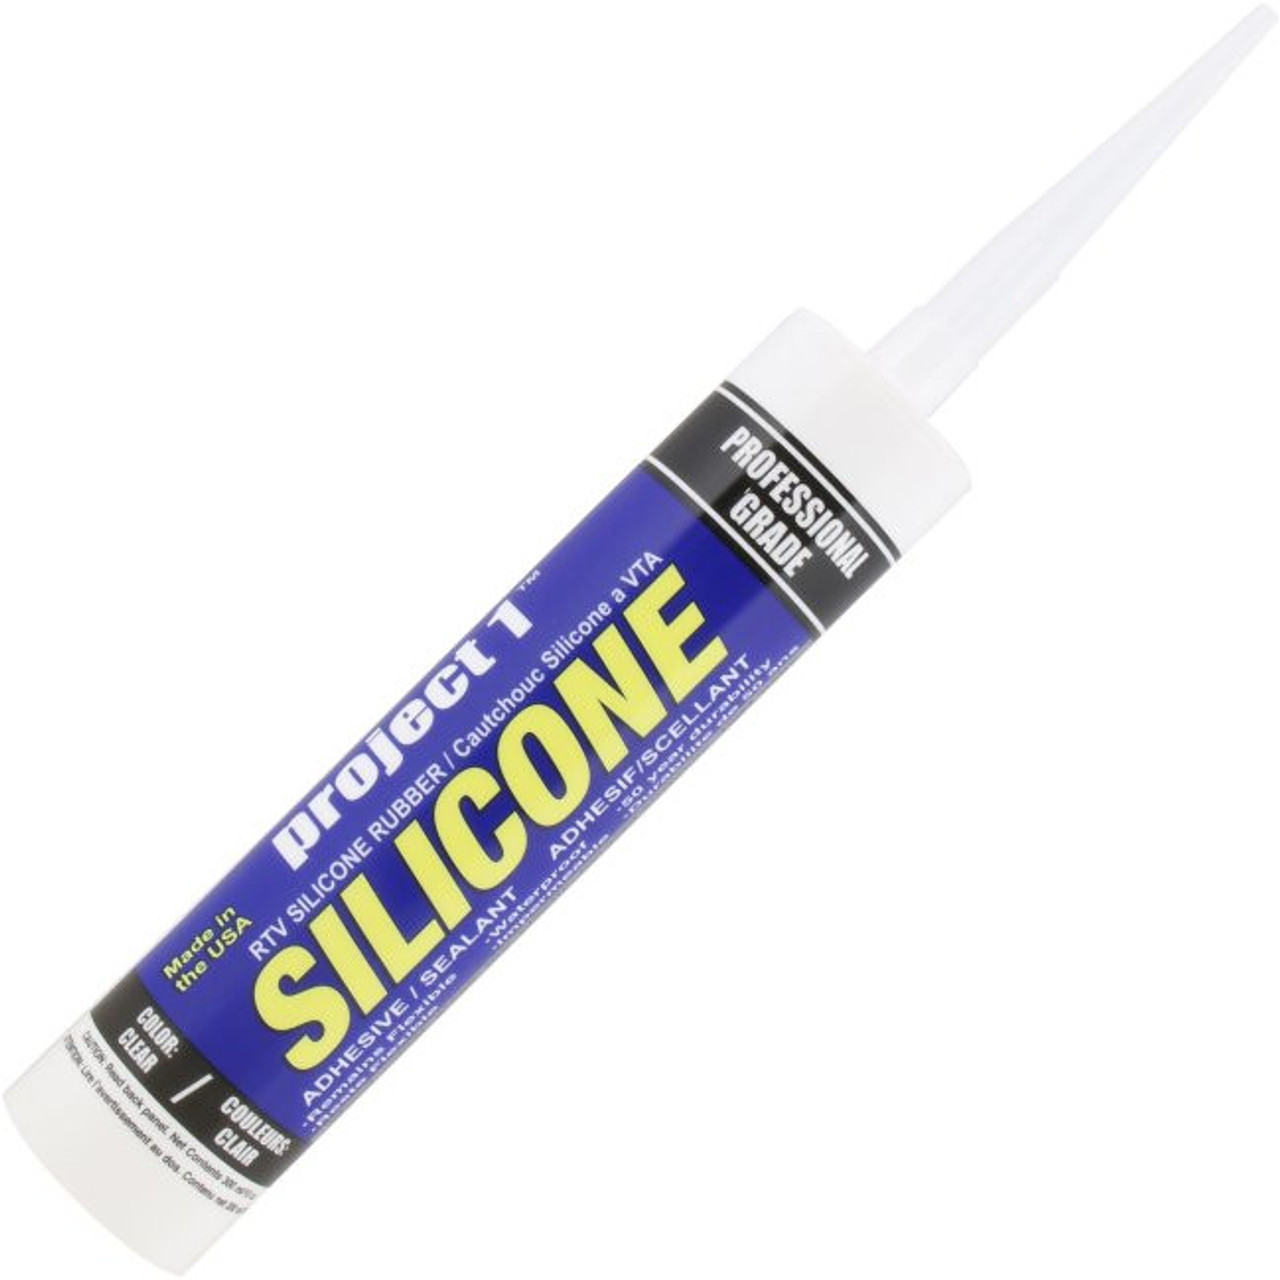 Select Neutral Cure 100% RTV Silicone Sealant (Detached Nozzle)